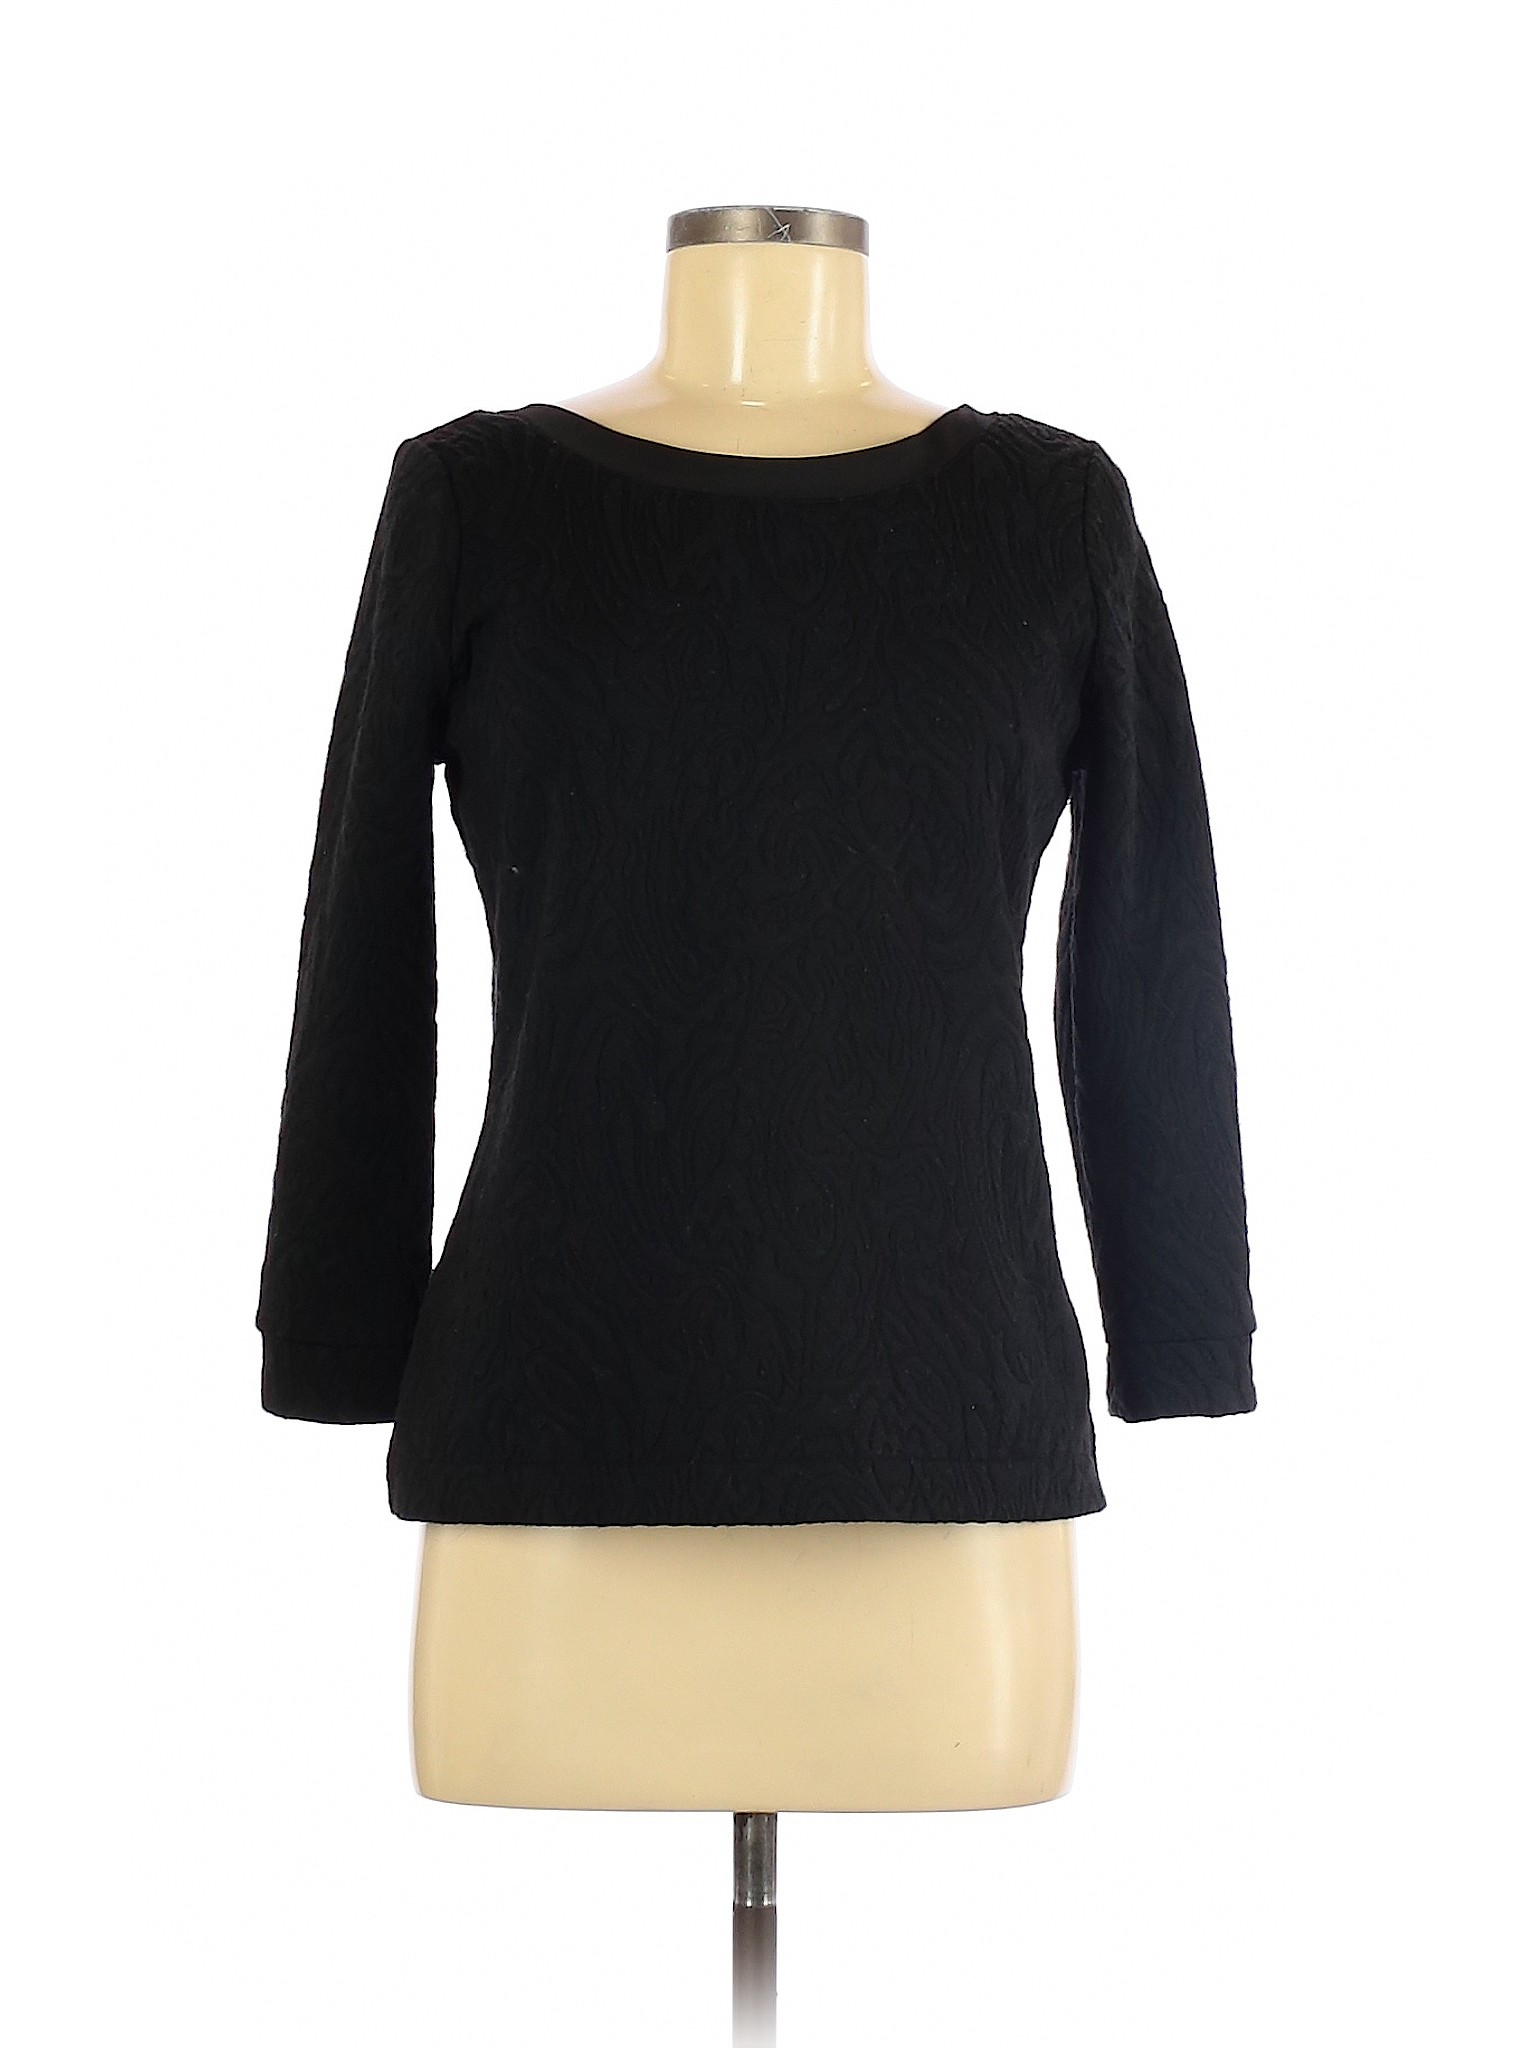 Banana Republic Women Black Pullover Sweater M | eBay